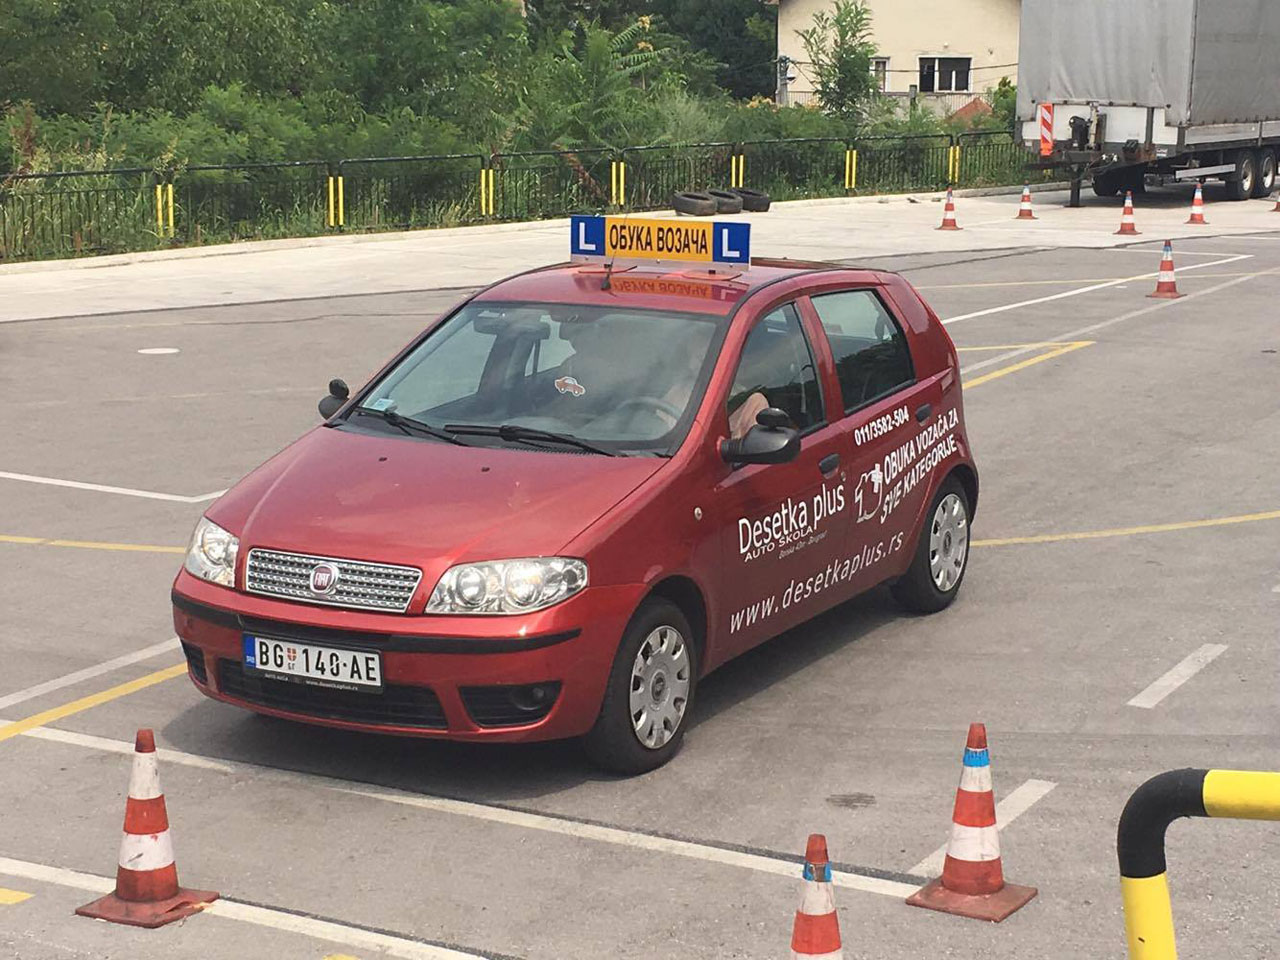 DESETKA PLUS Driving schools Beograd